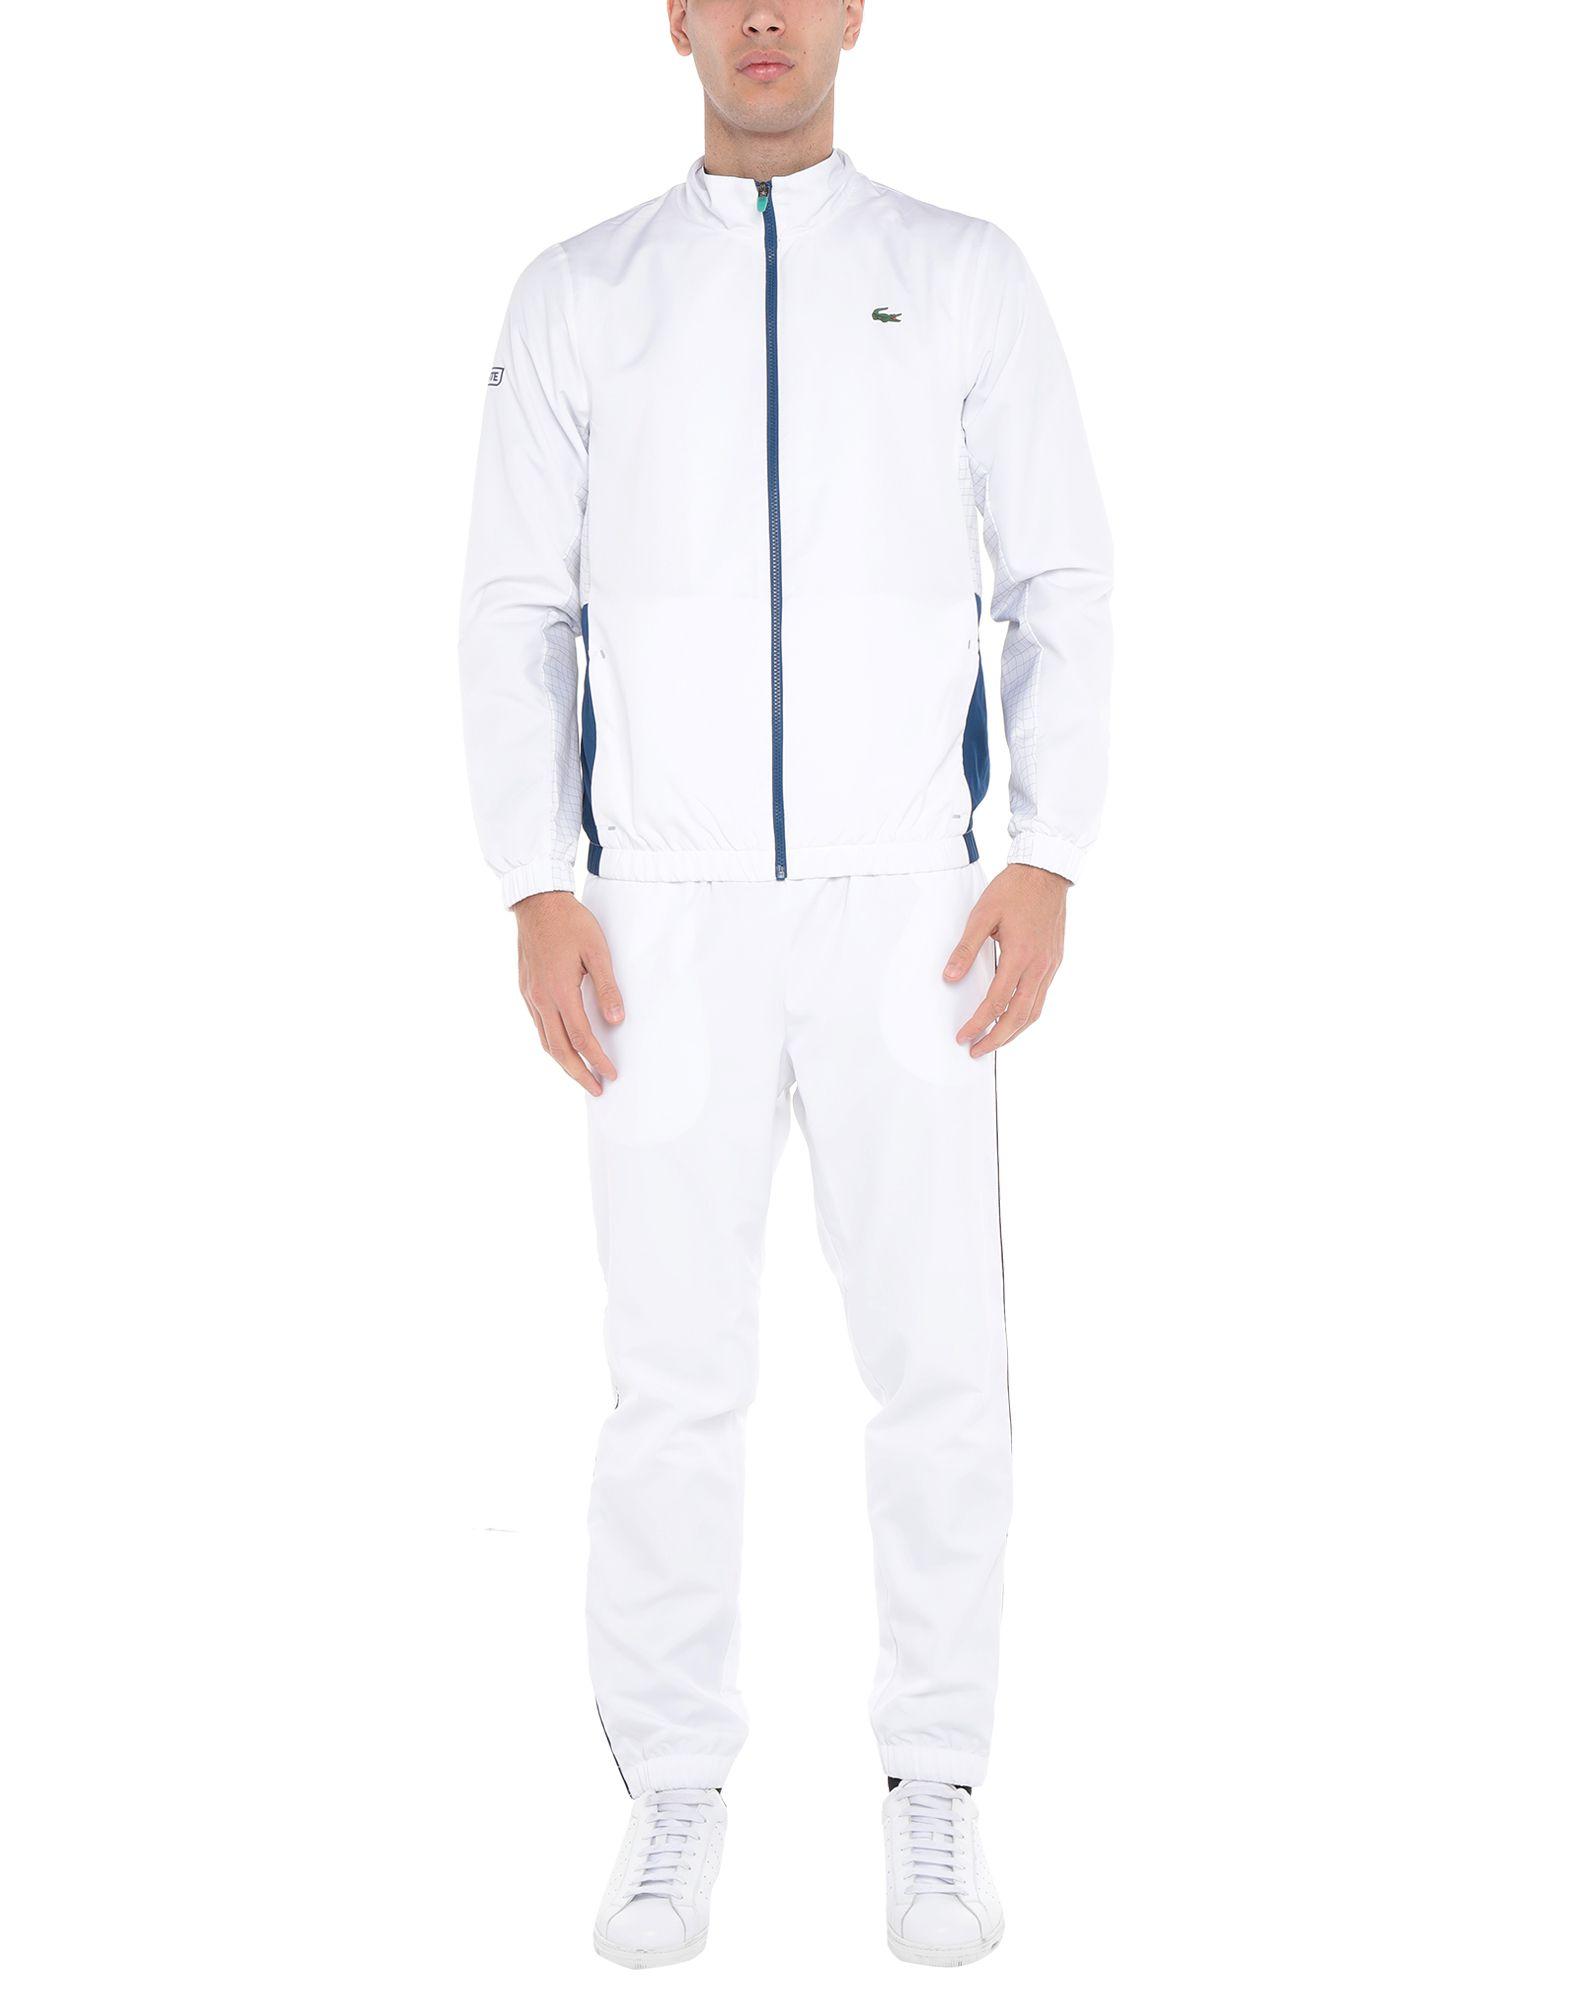 Lacoste Sport Synthetic Sweatsuit in White for Men - Lyst